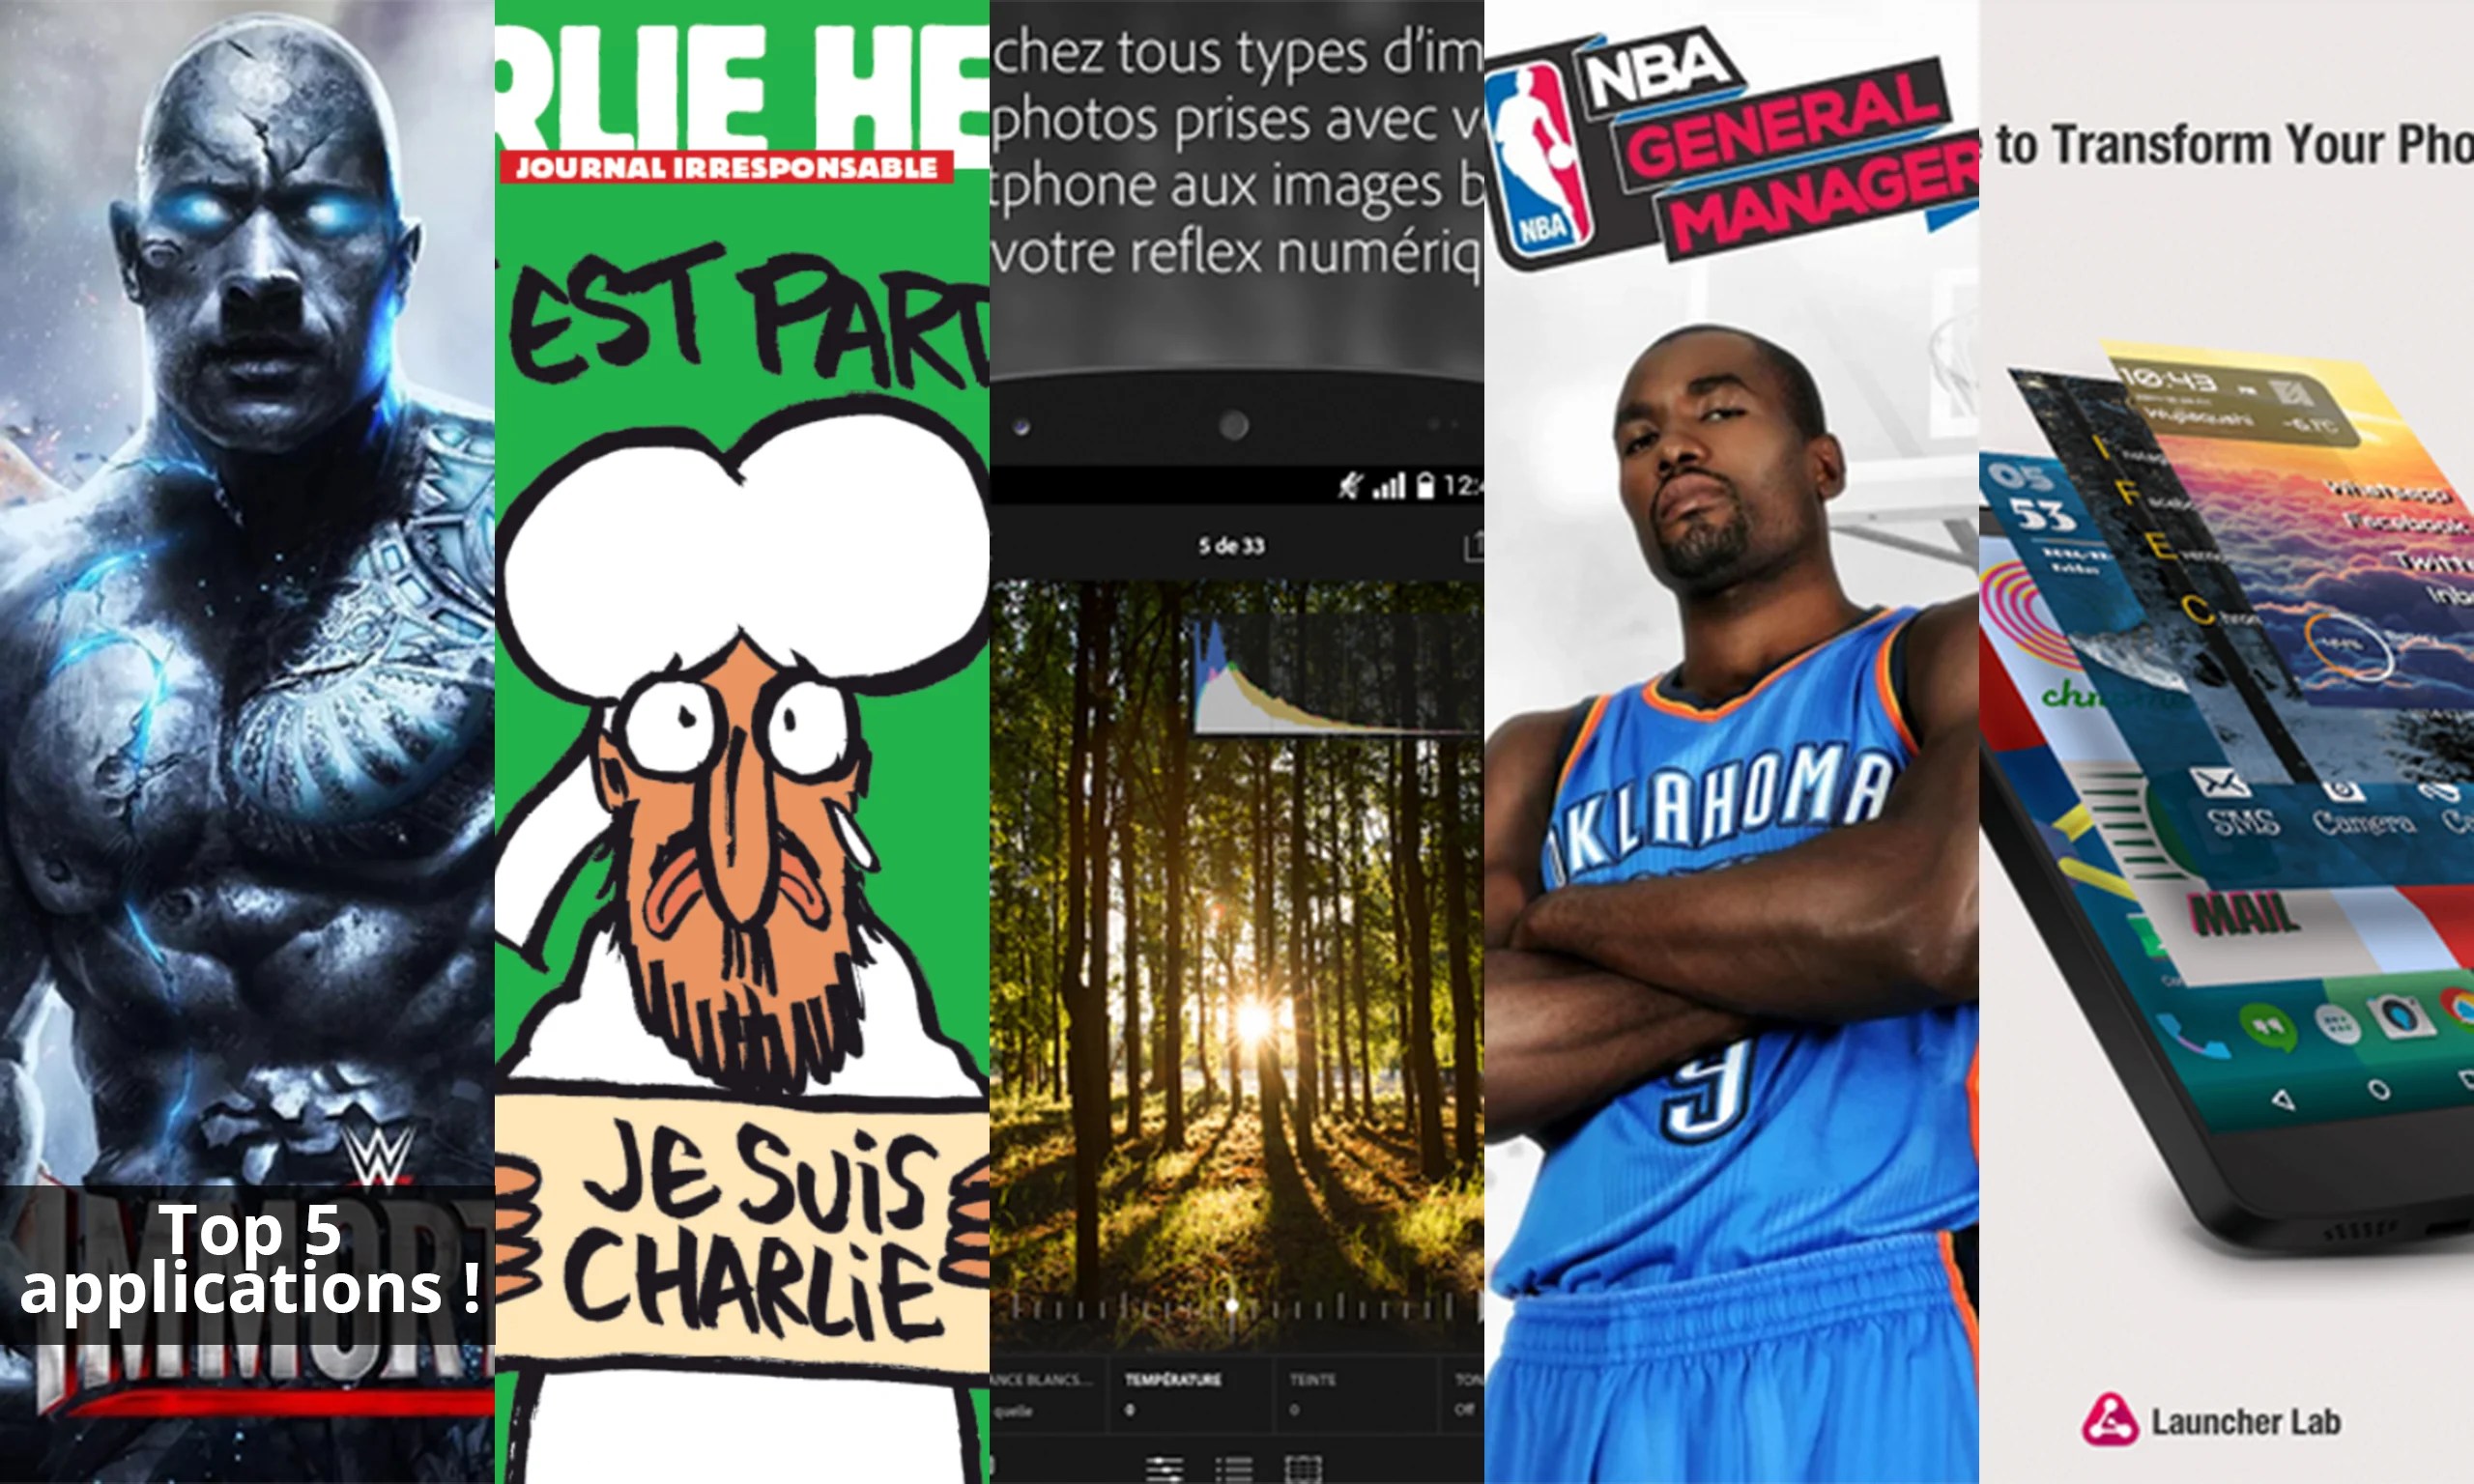 Les apps de la semaine : WWE Immortals, Charlie Hebdo, Adobe Lightroom mobile, NBA General Manager 2015 et Launcher Lab